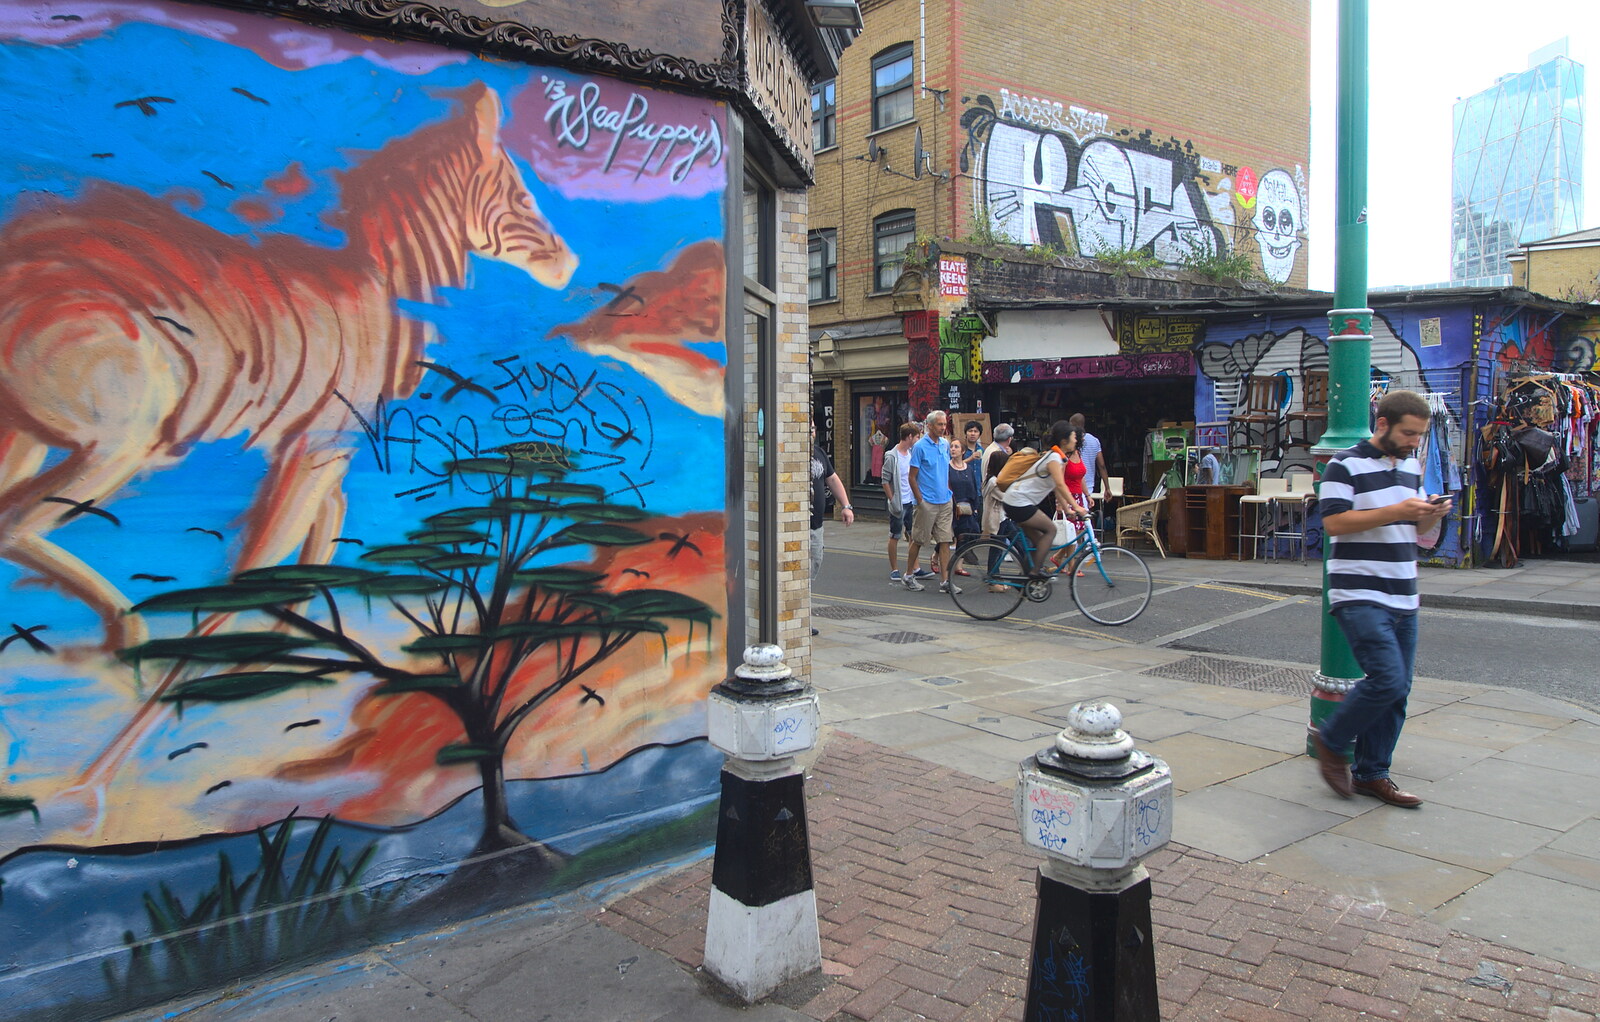 A street mural from Spitalfields and Brick Lane Street Art, Whitechapel, London - 10th August 2013